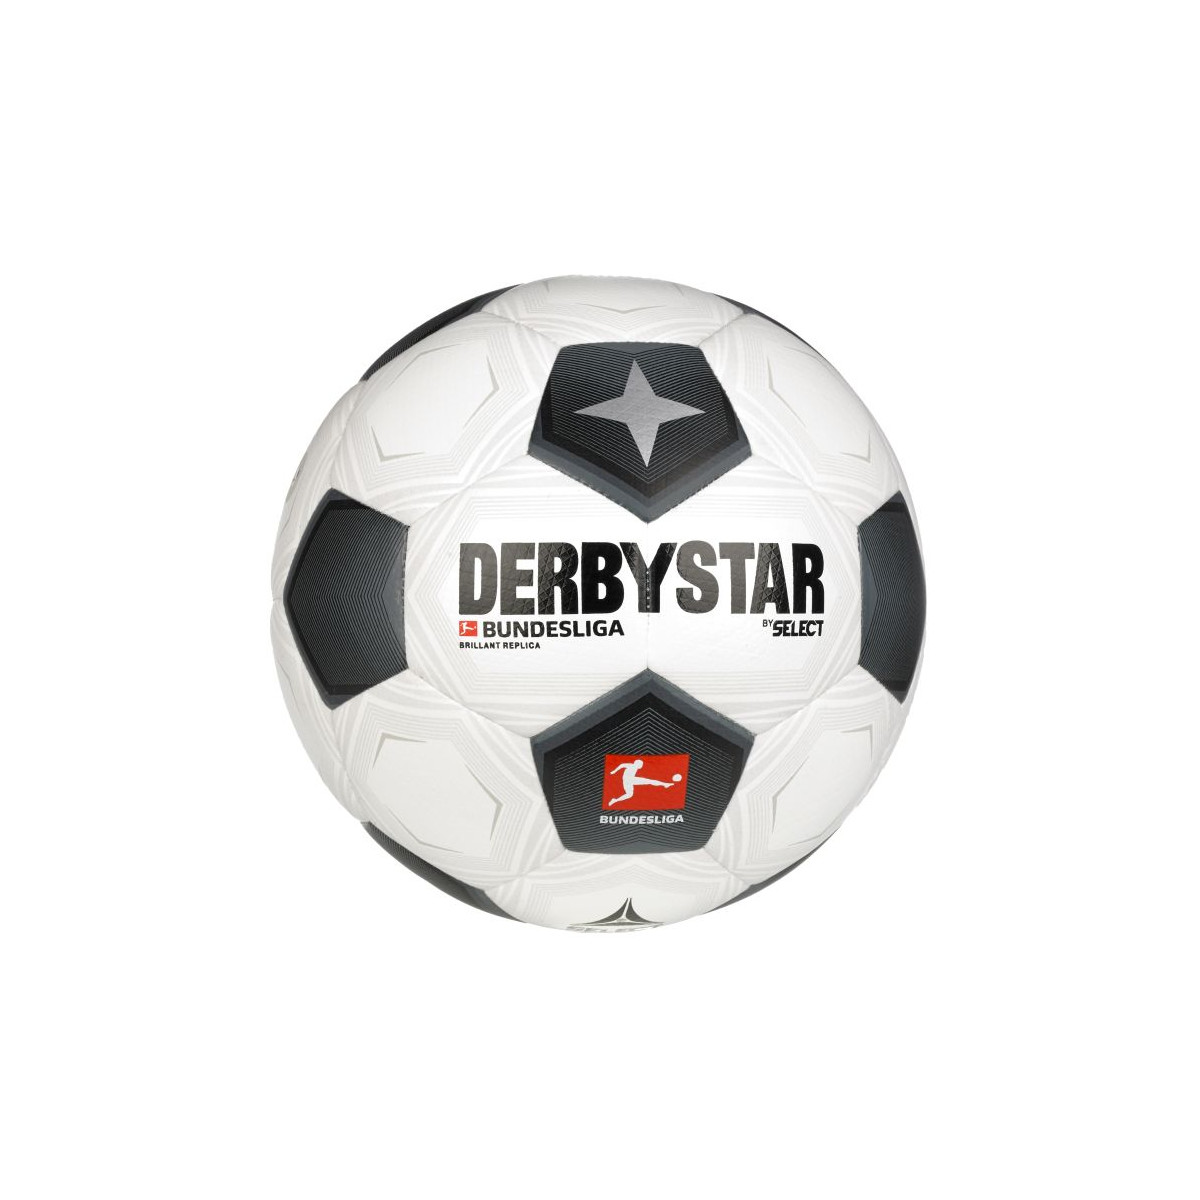 Derbystar Fußball BRILLANT REPLICA